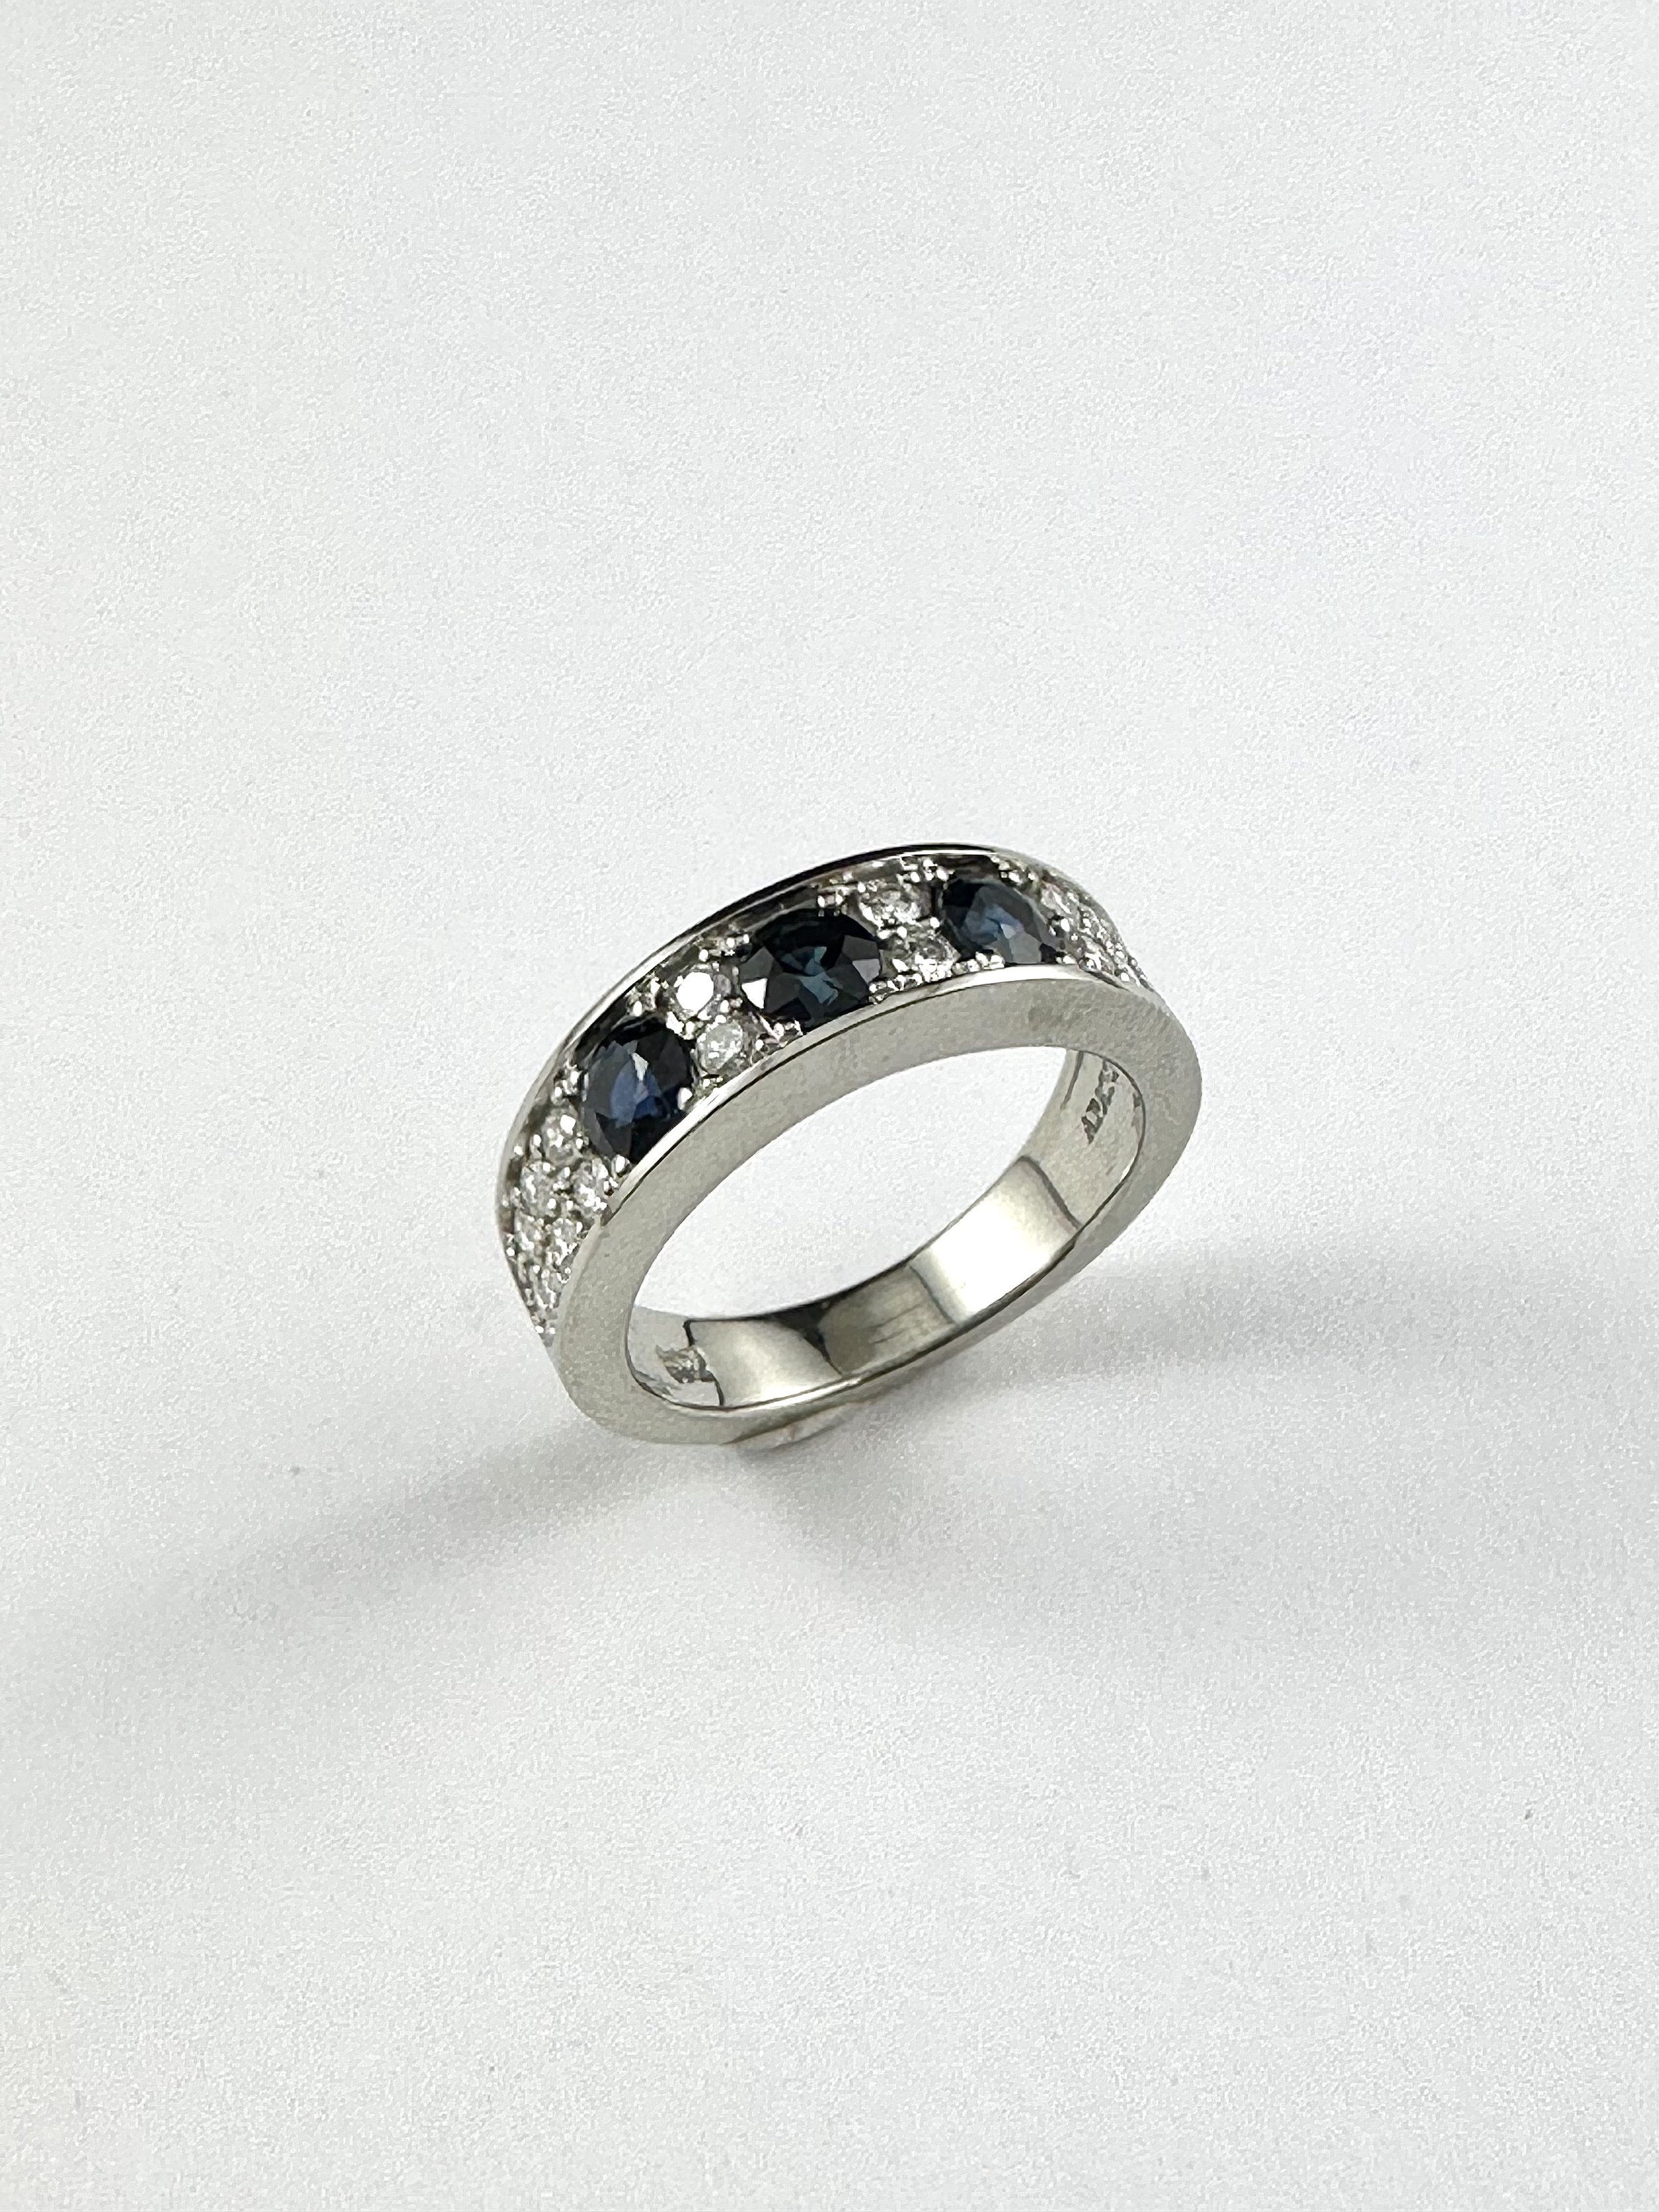 19K White Gold Diamond and Sapphire Ring